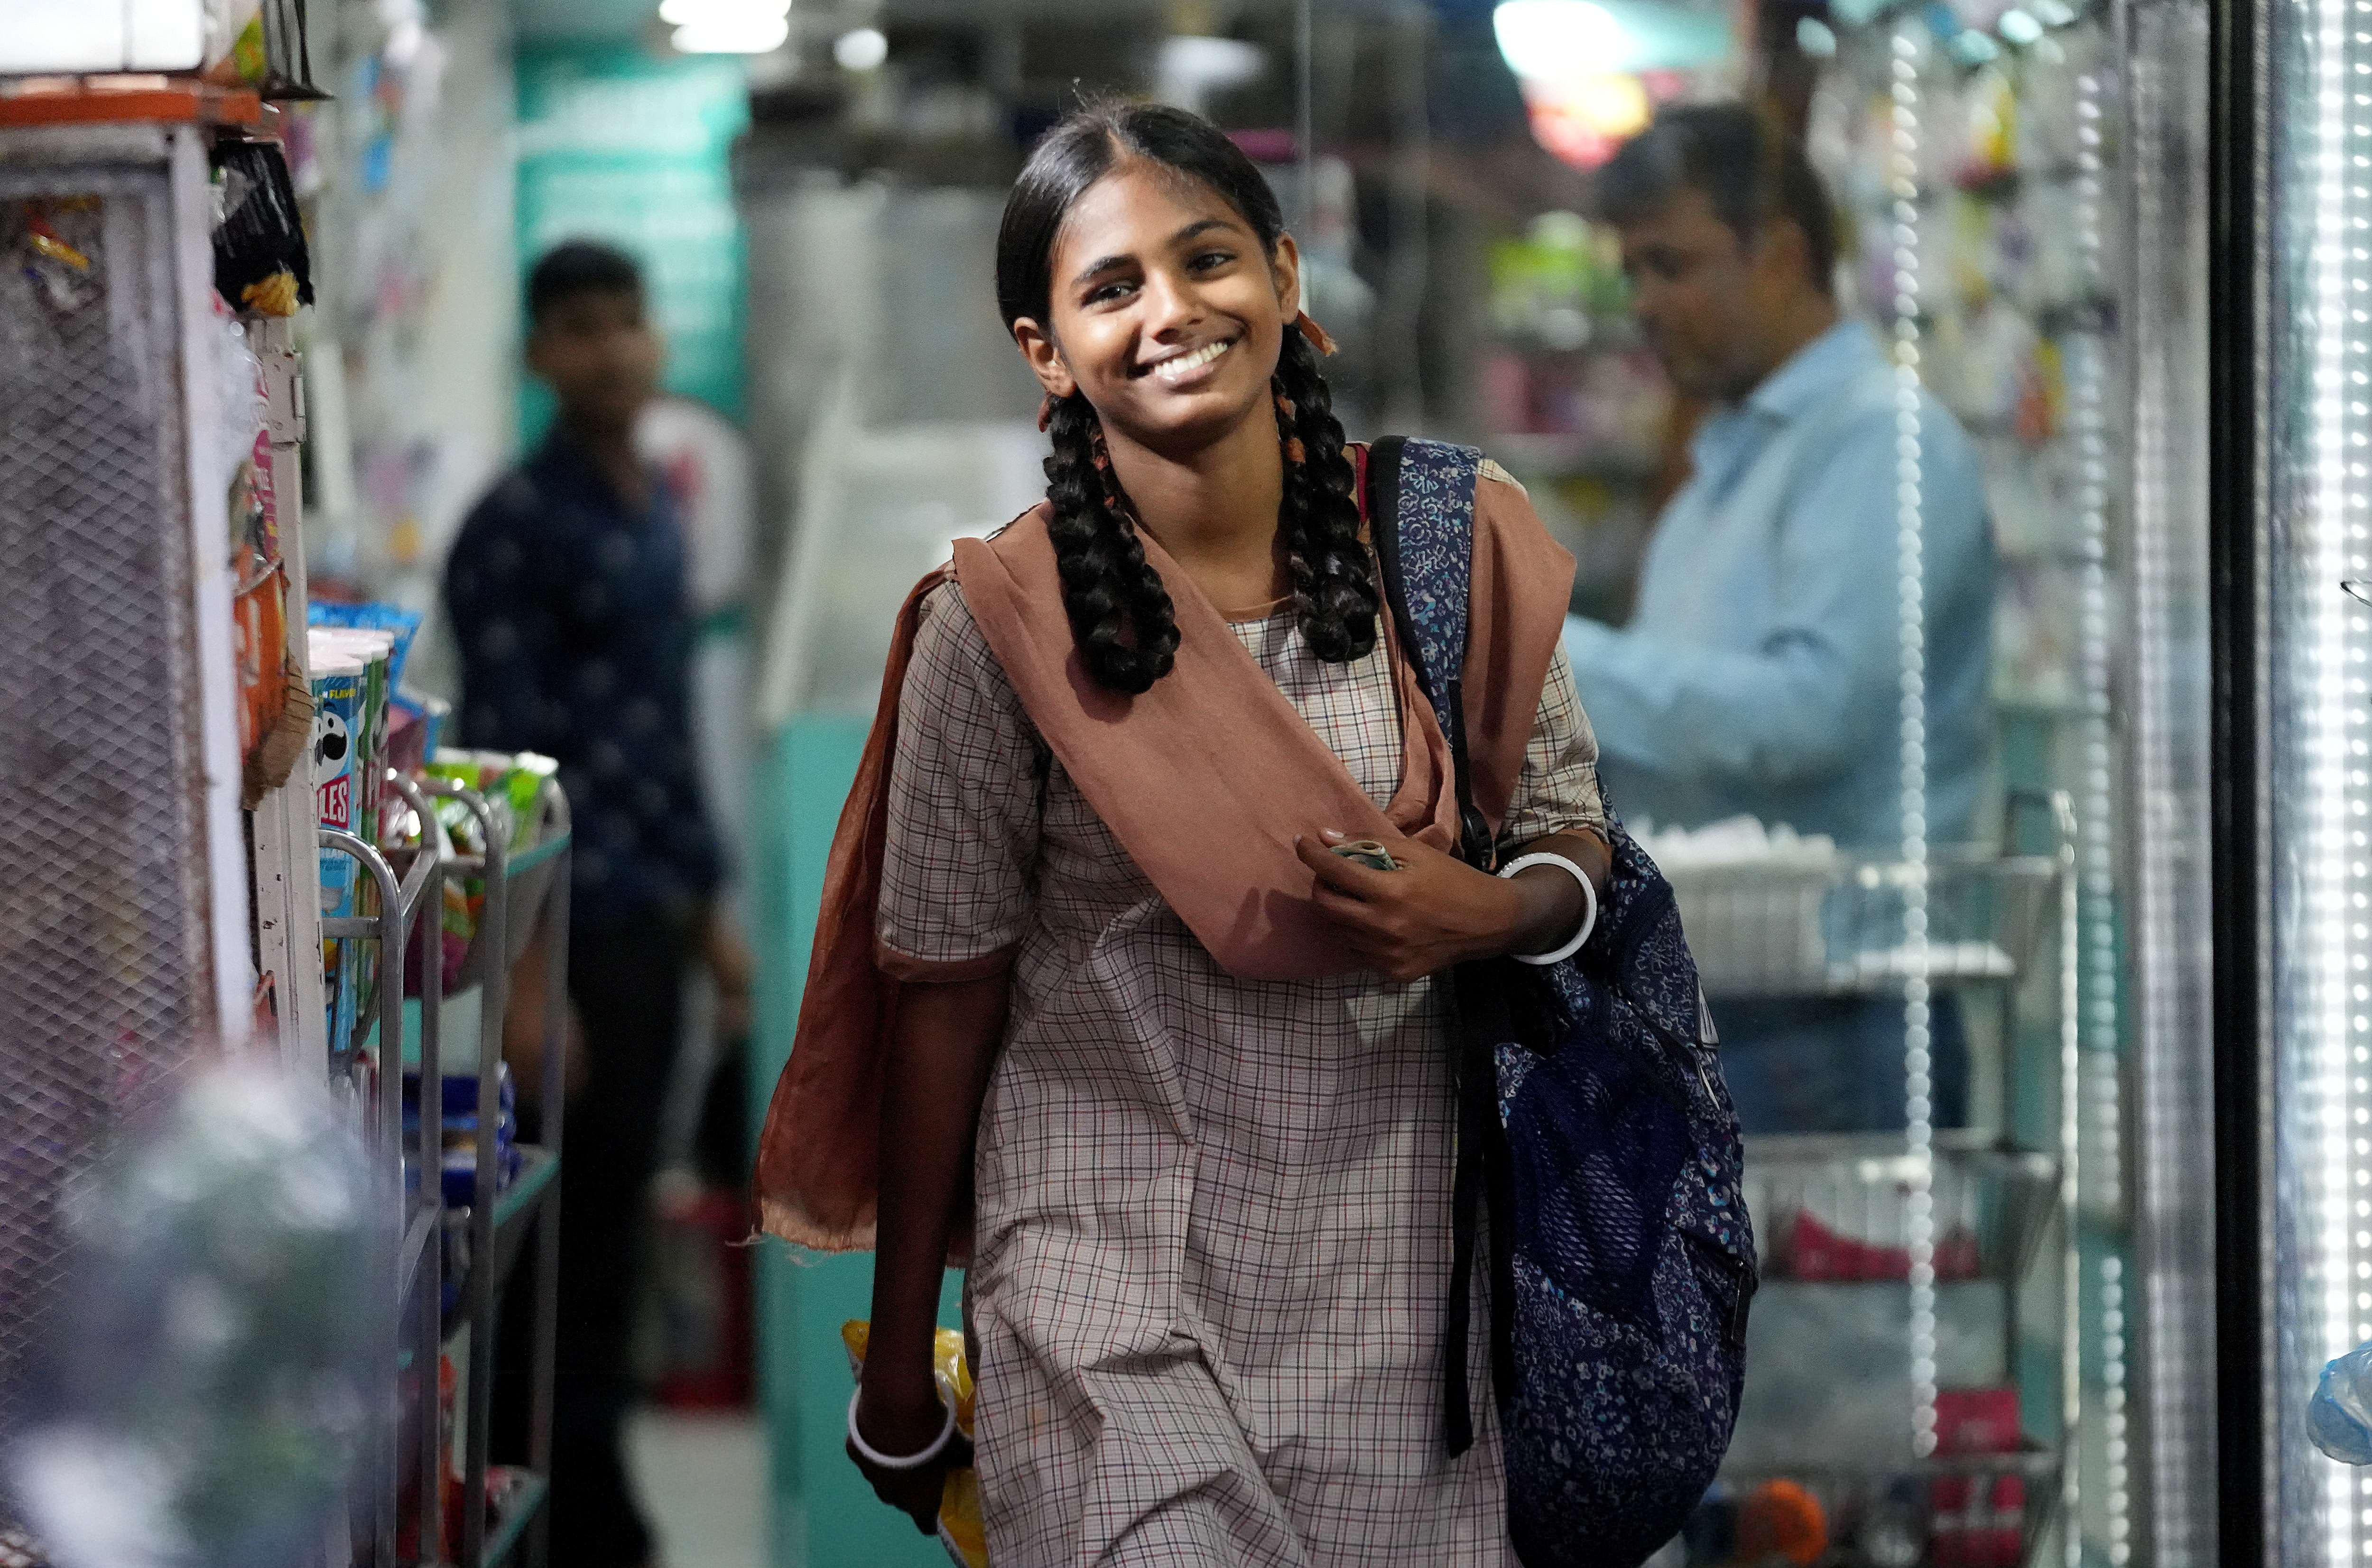 Maleesha Kharwa reacts as she leaves a grocery store in Mumbai